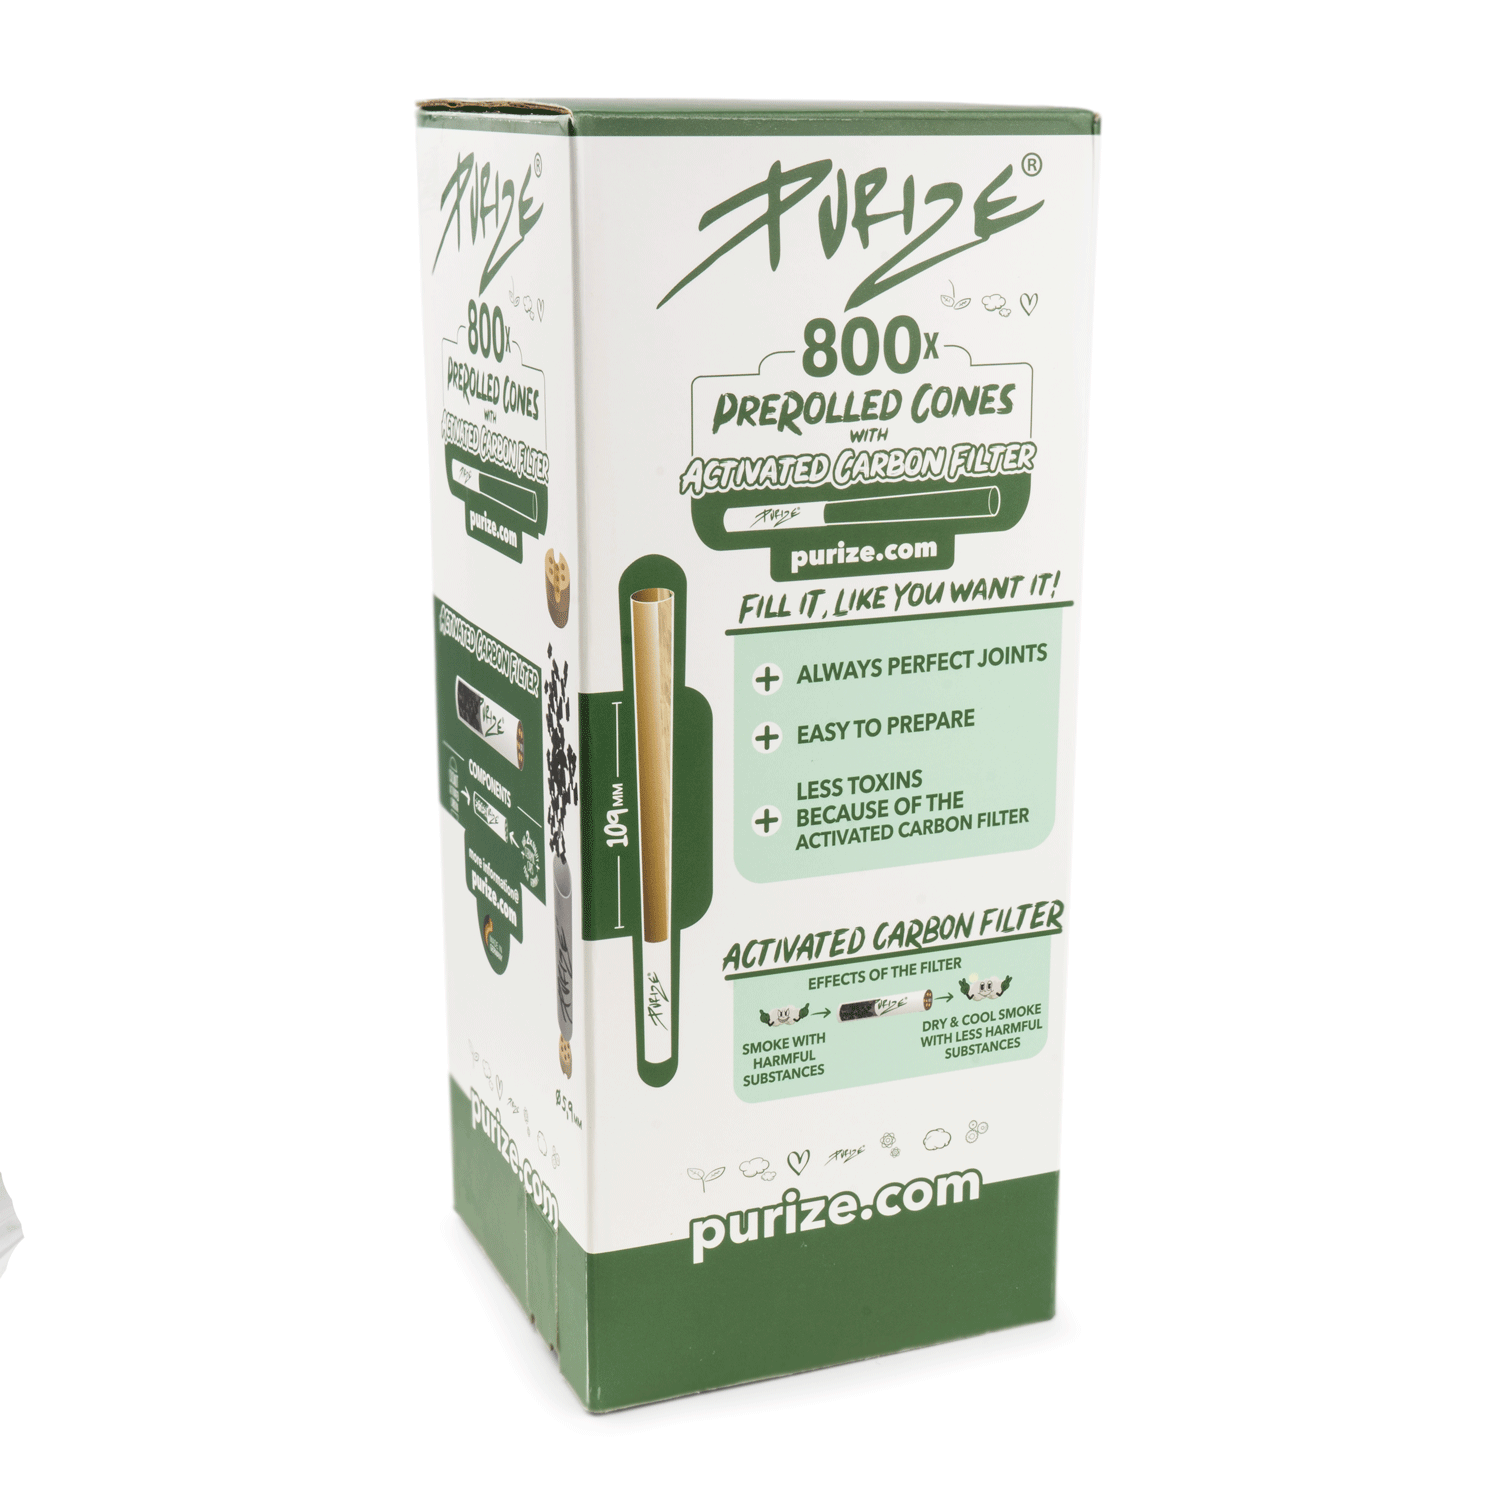 Filtre en stick 5,7 mm Ultra Slim x 10 | RIZLA Bamboo